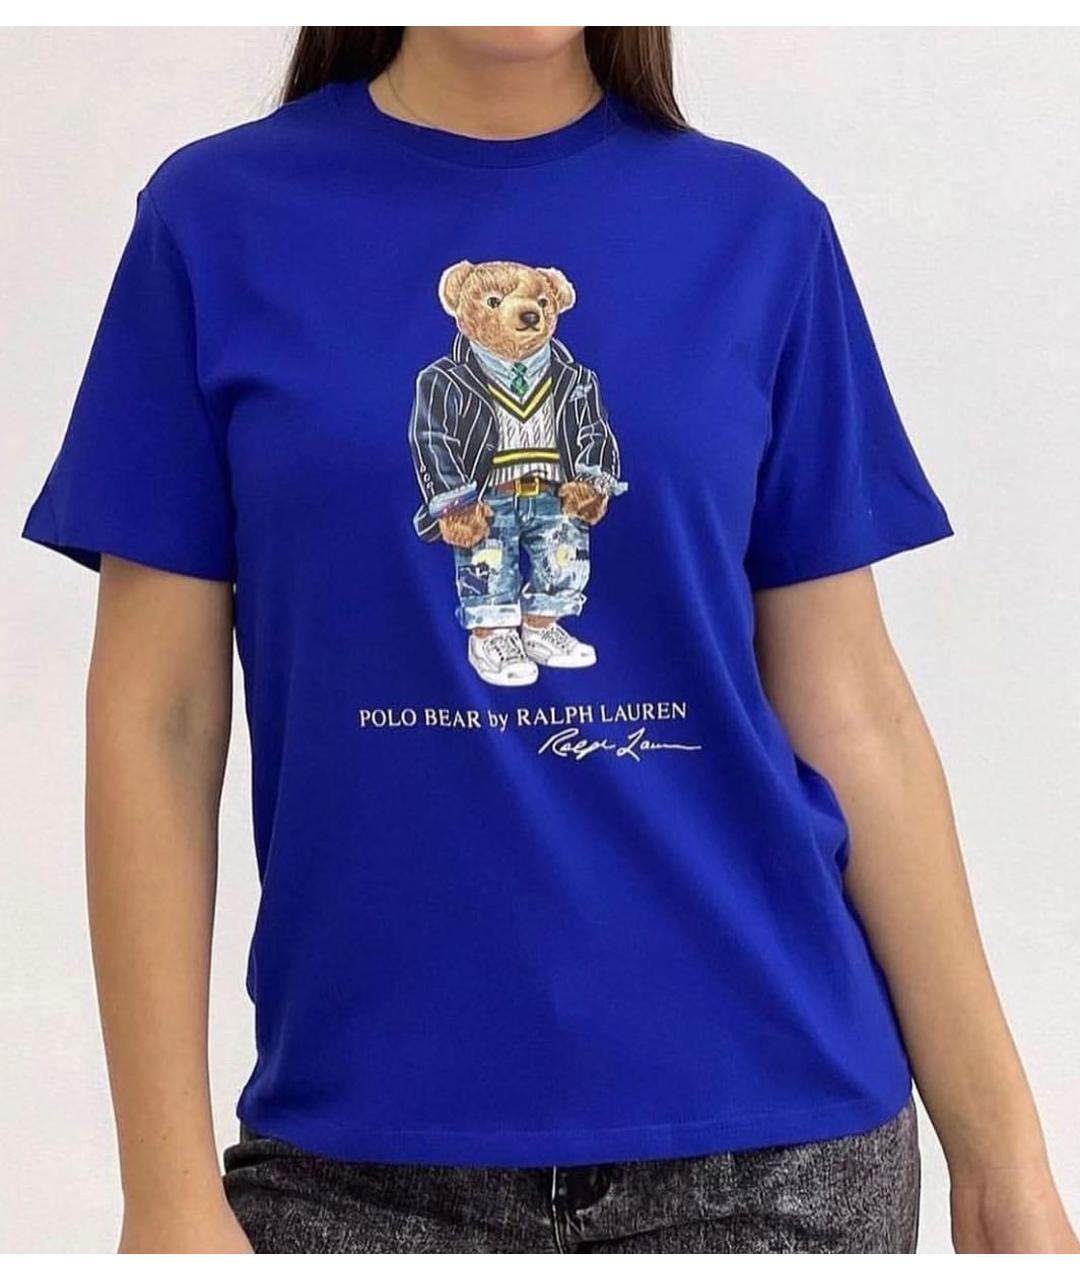 POLO RALPH LAUREN Синяя хлопковая футболка, фото 5